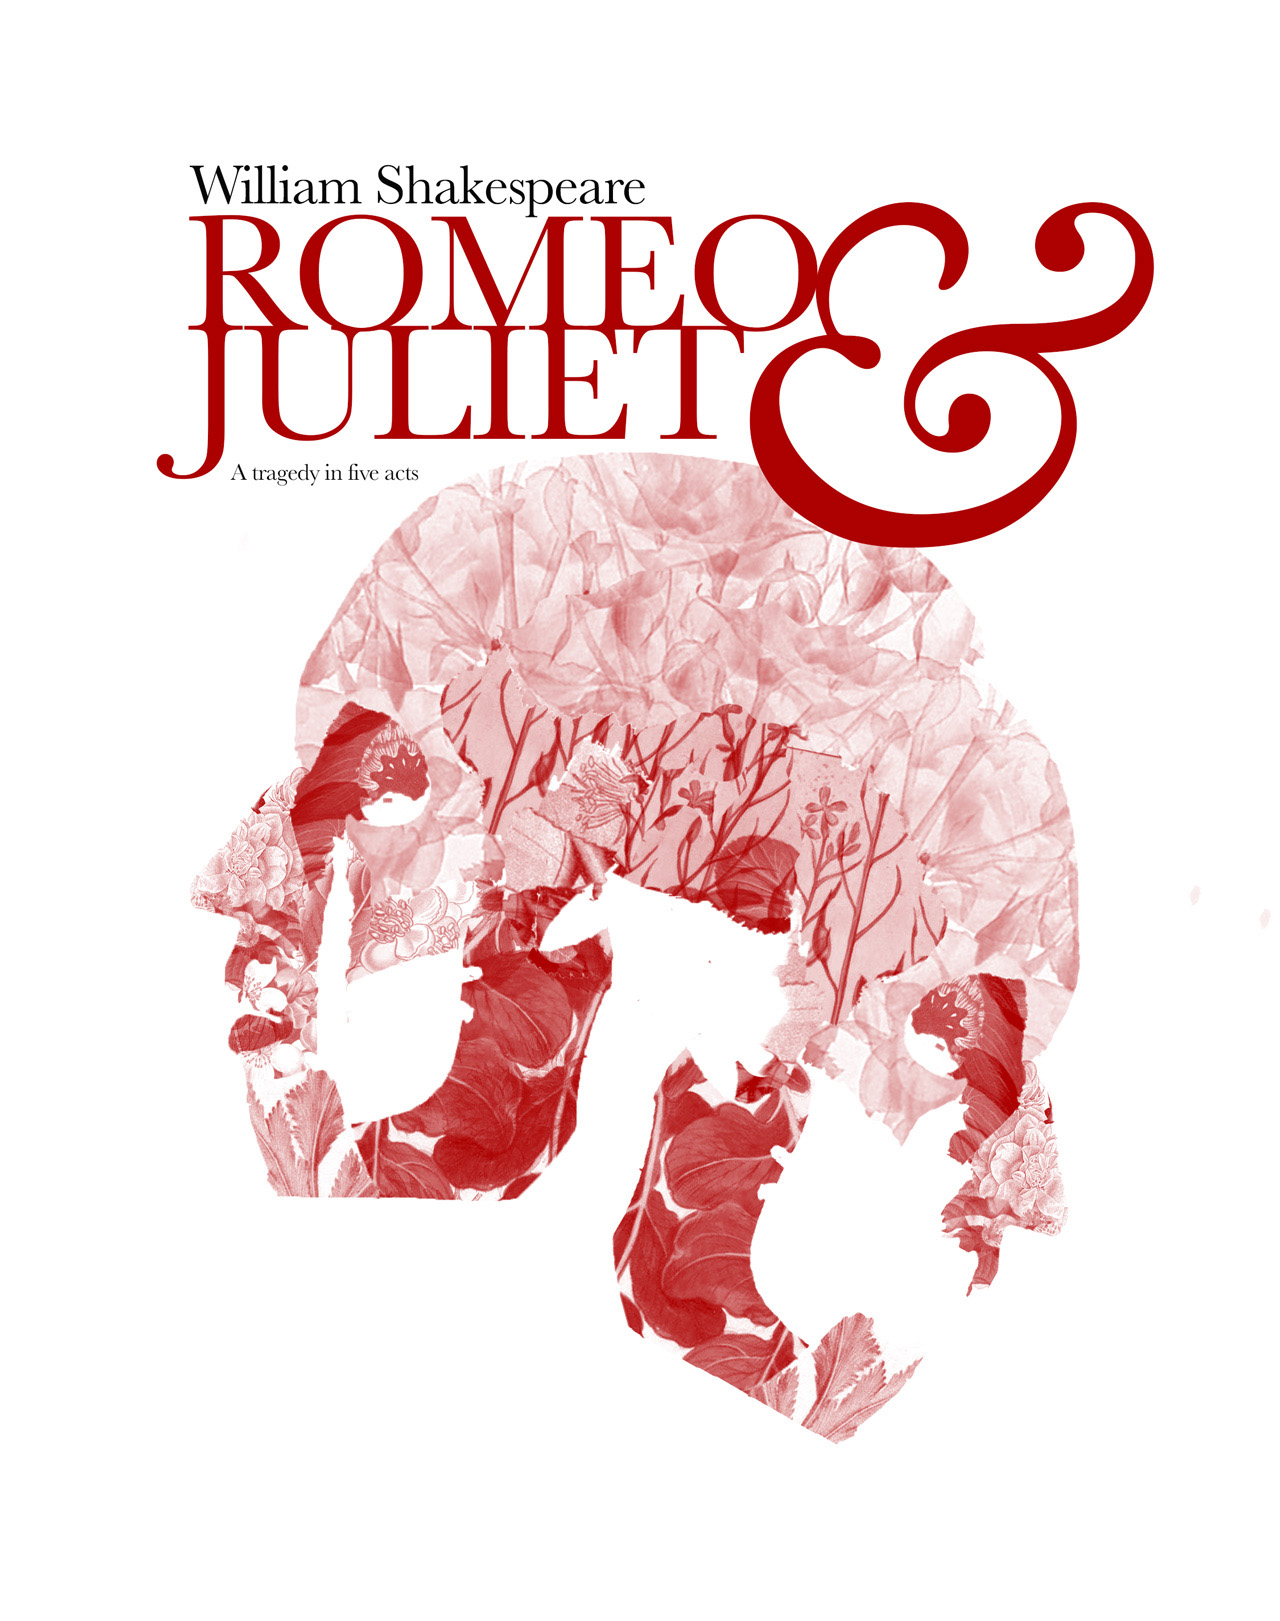 Chris Hatfield | "Romeo & Juliet" by William Shakespeare 